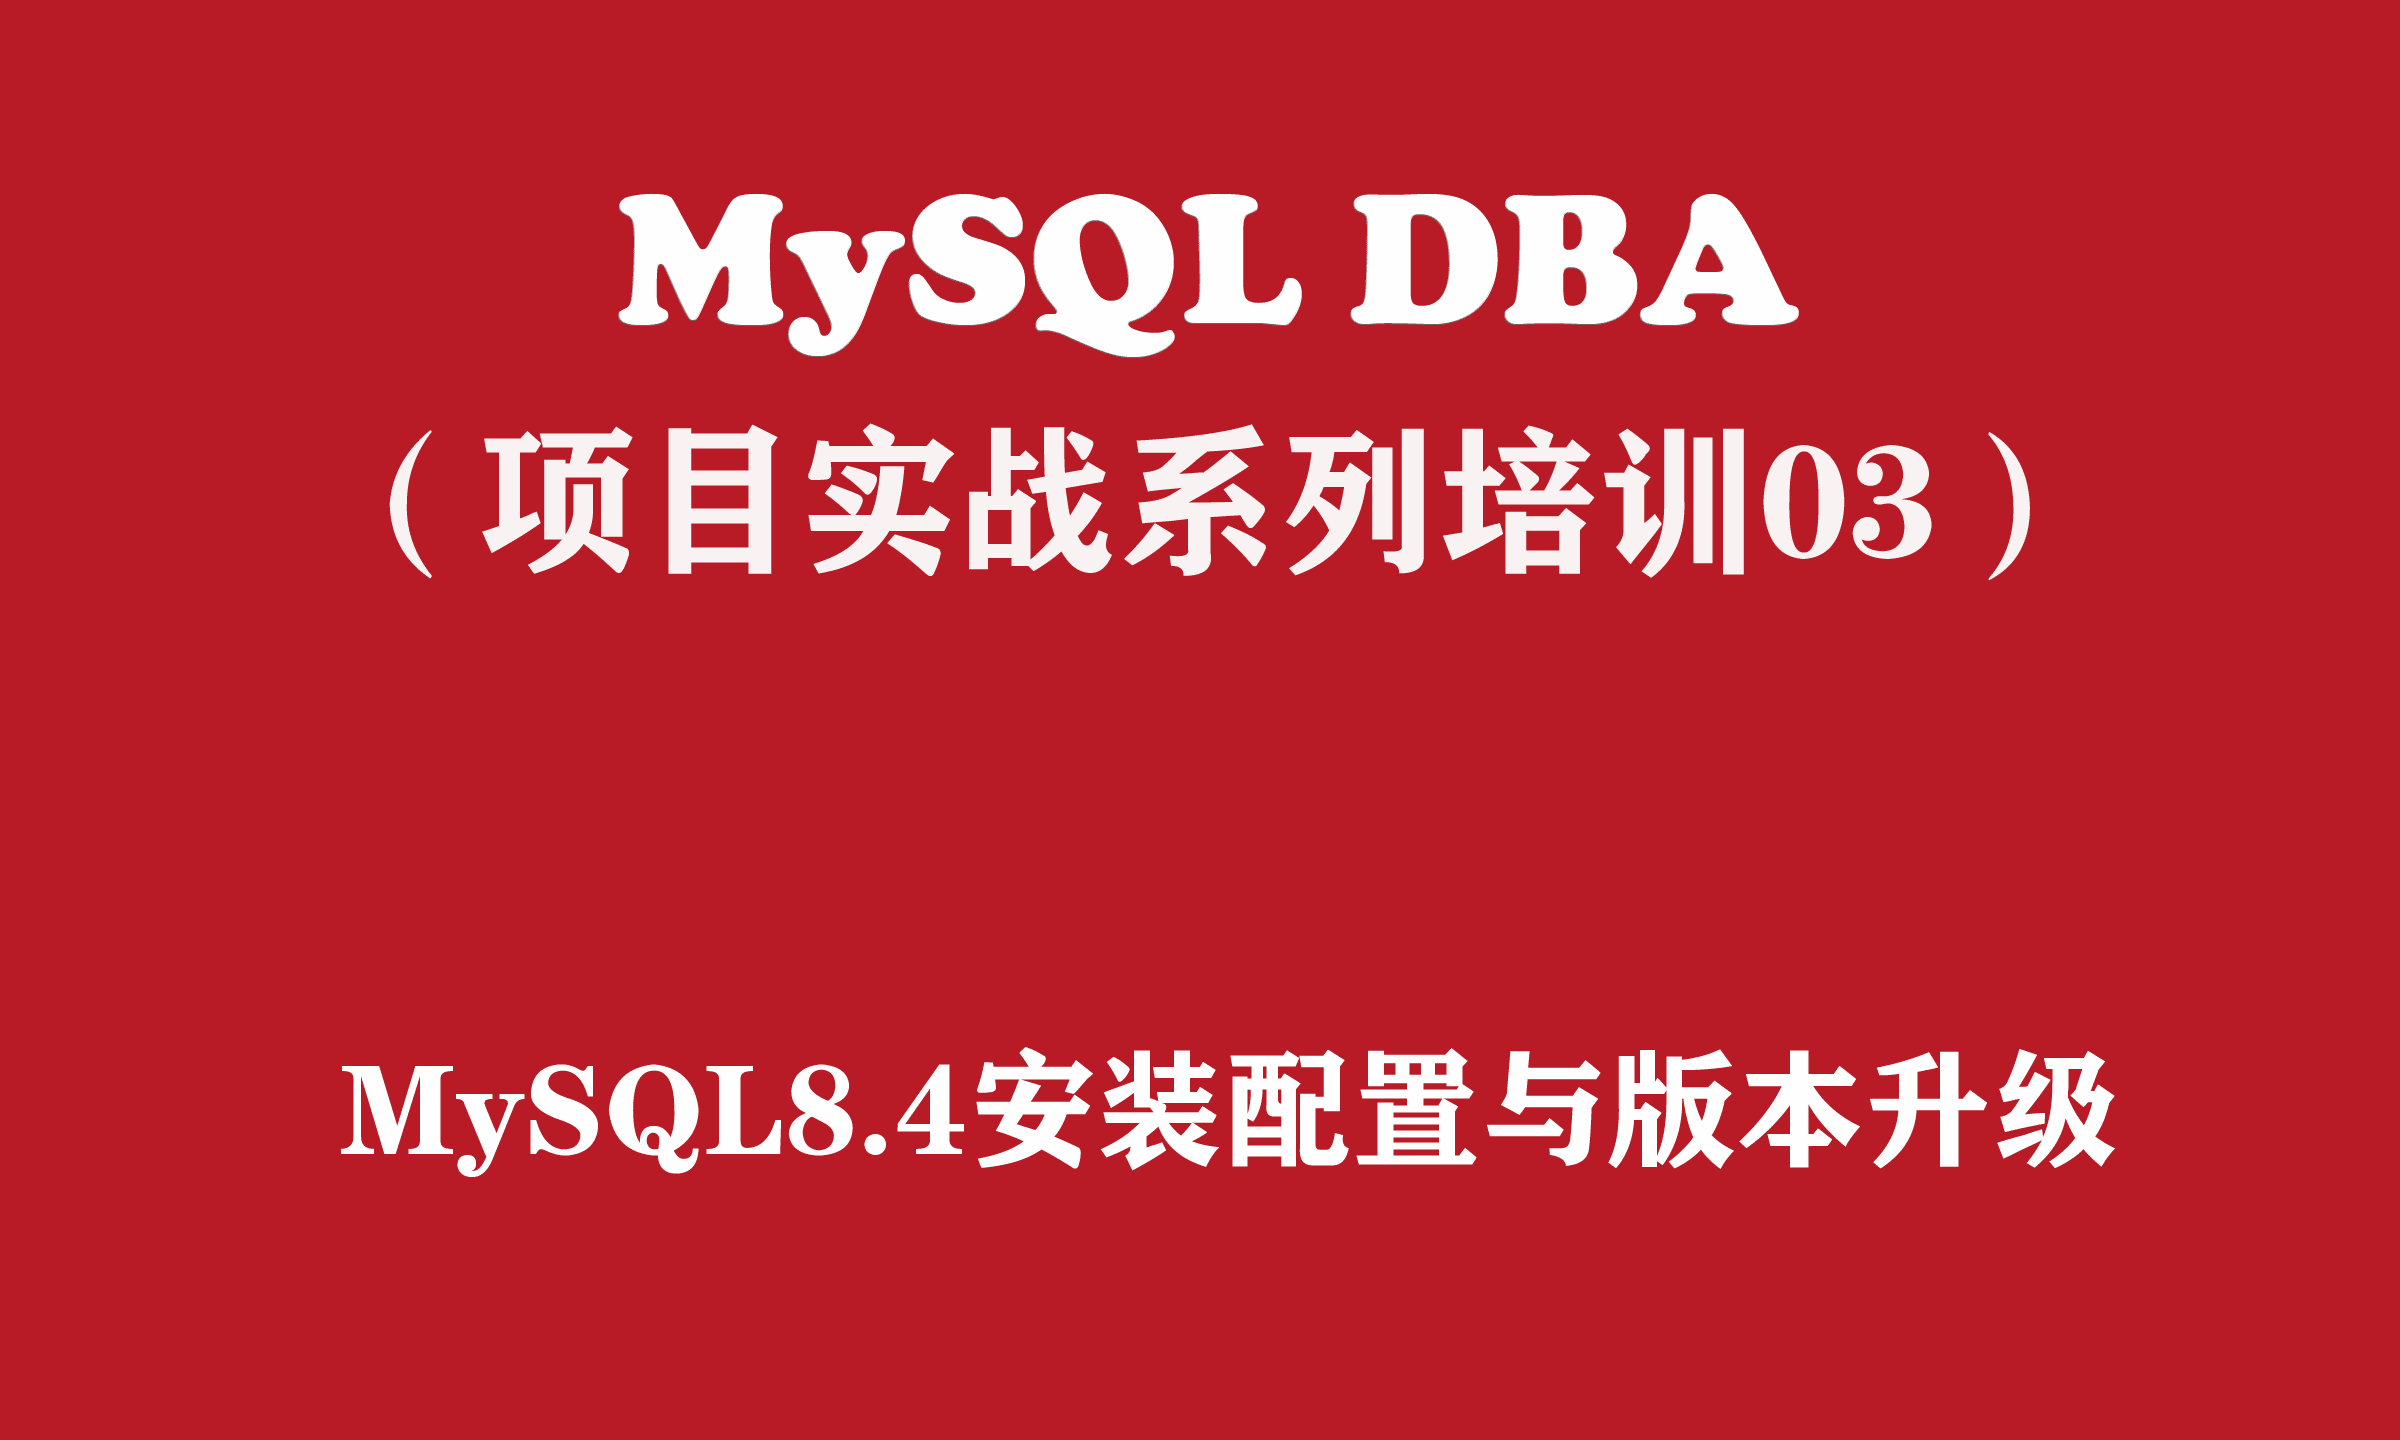  MySQL 8.4 Installation Configuration and Version Upgrade [MySQL DBA Practical Training Series 03]